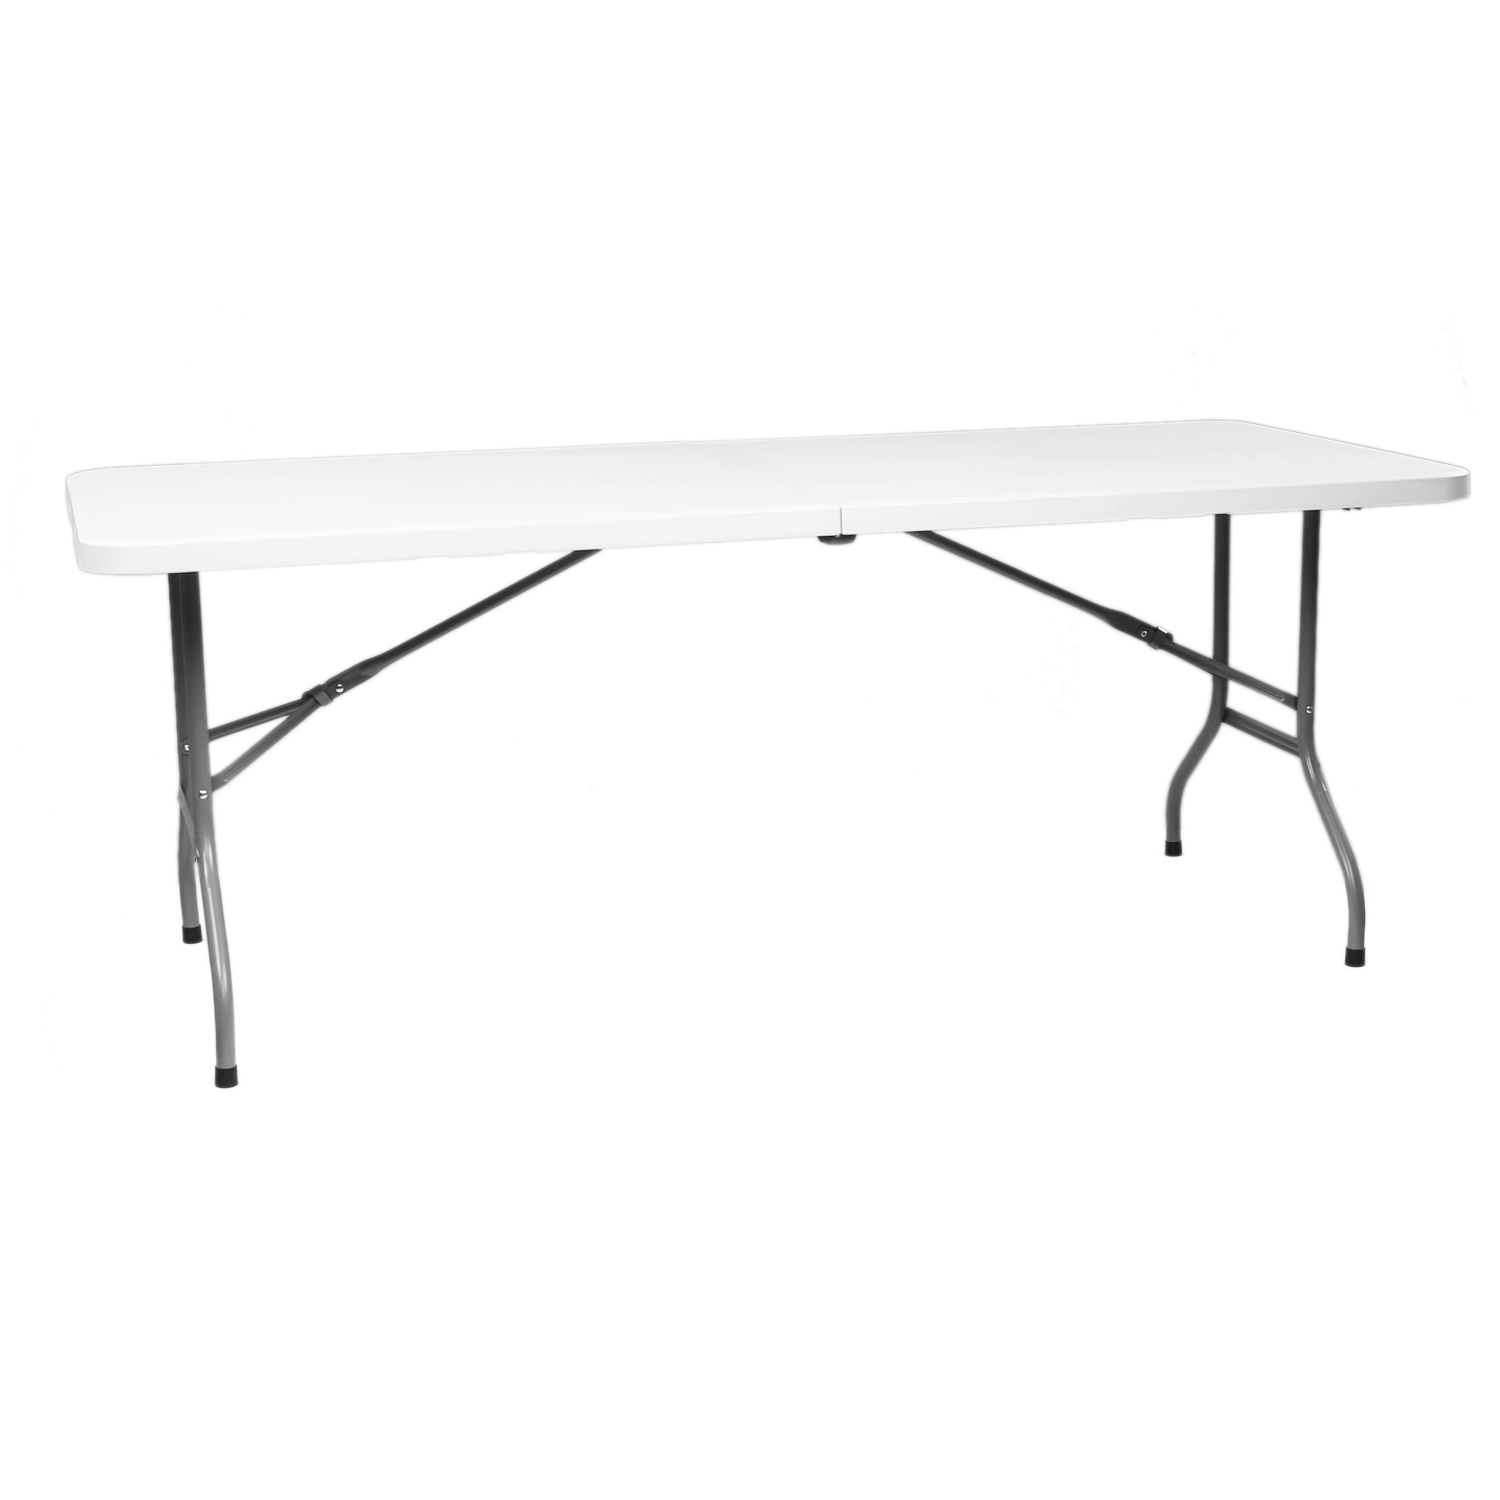 MoNiBloom 8Ft Folding Heavy Duty Table, Indoor Outdoor Portable